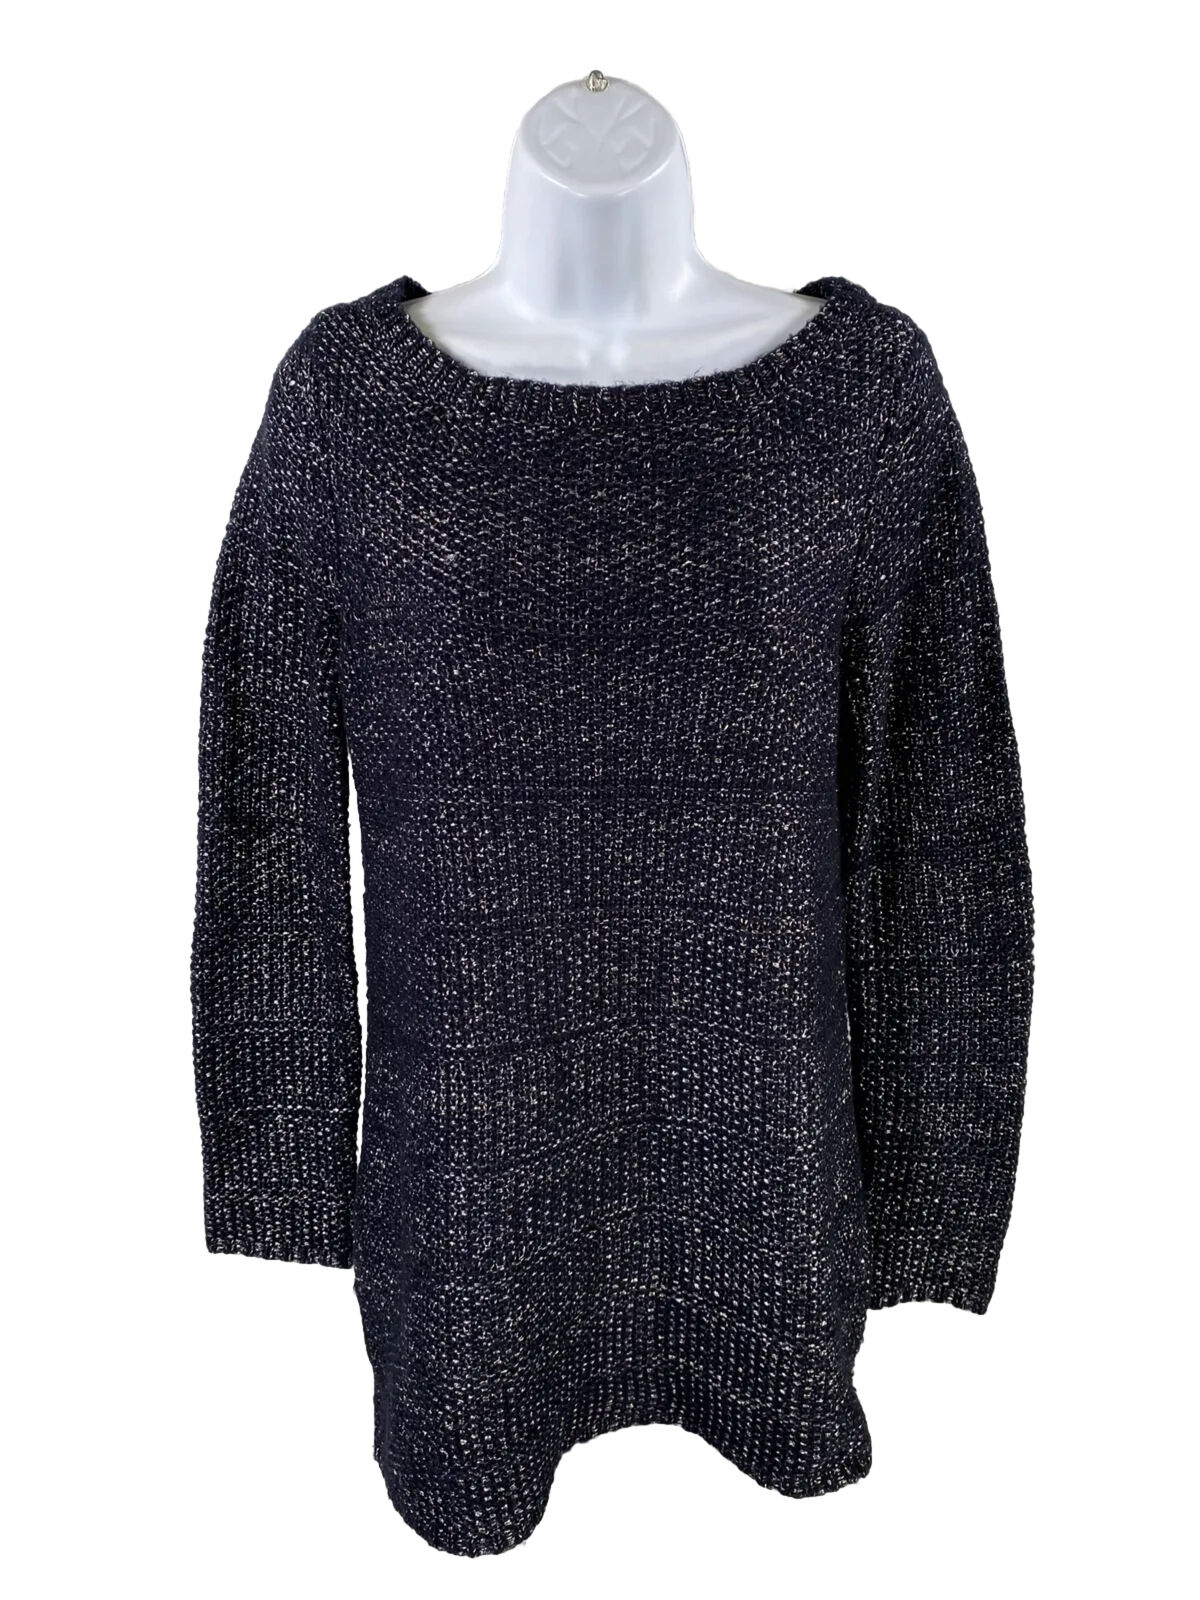 White House Black Market Women's Blue Metallic Pullover Sweater - XS